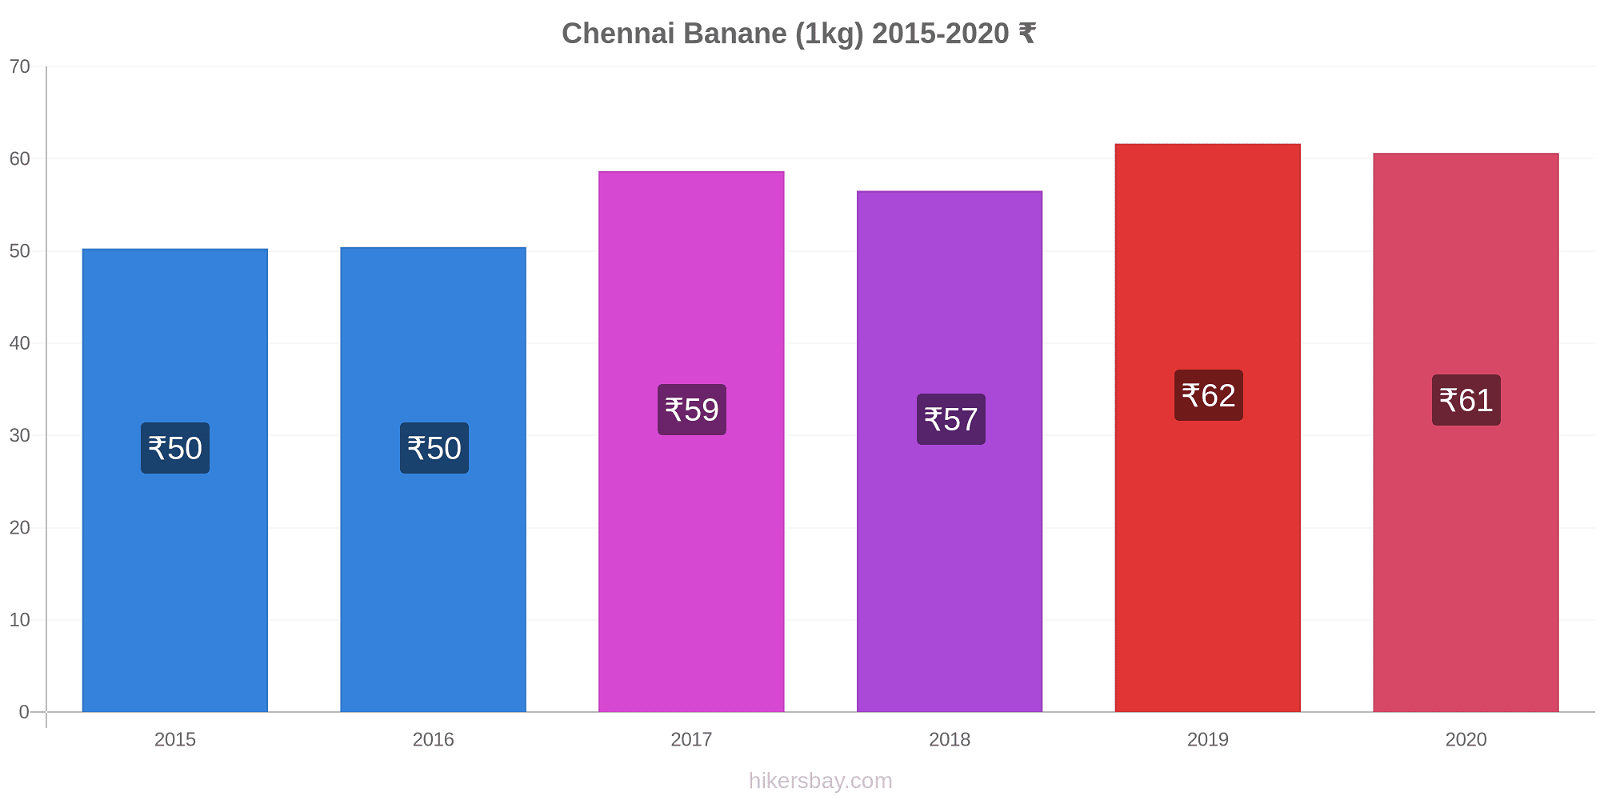 Chennai variazioni di prezzo Banana (1kg) hikersbay.com